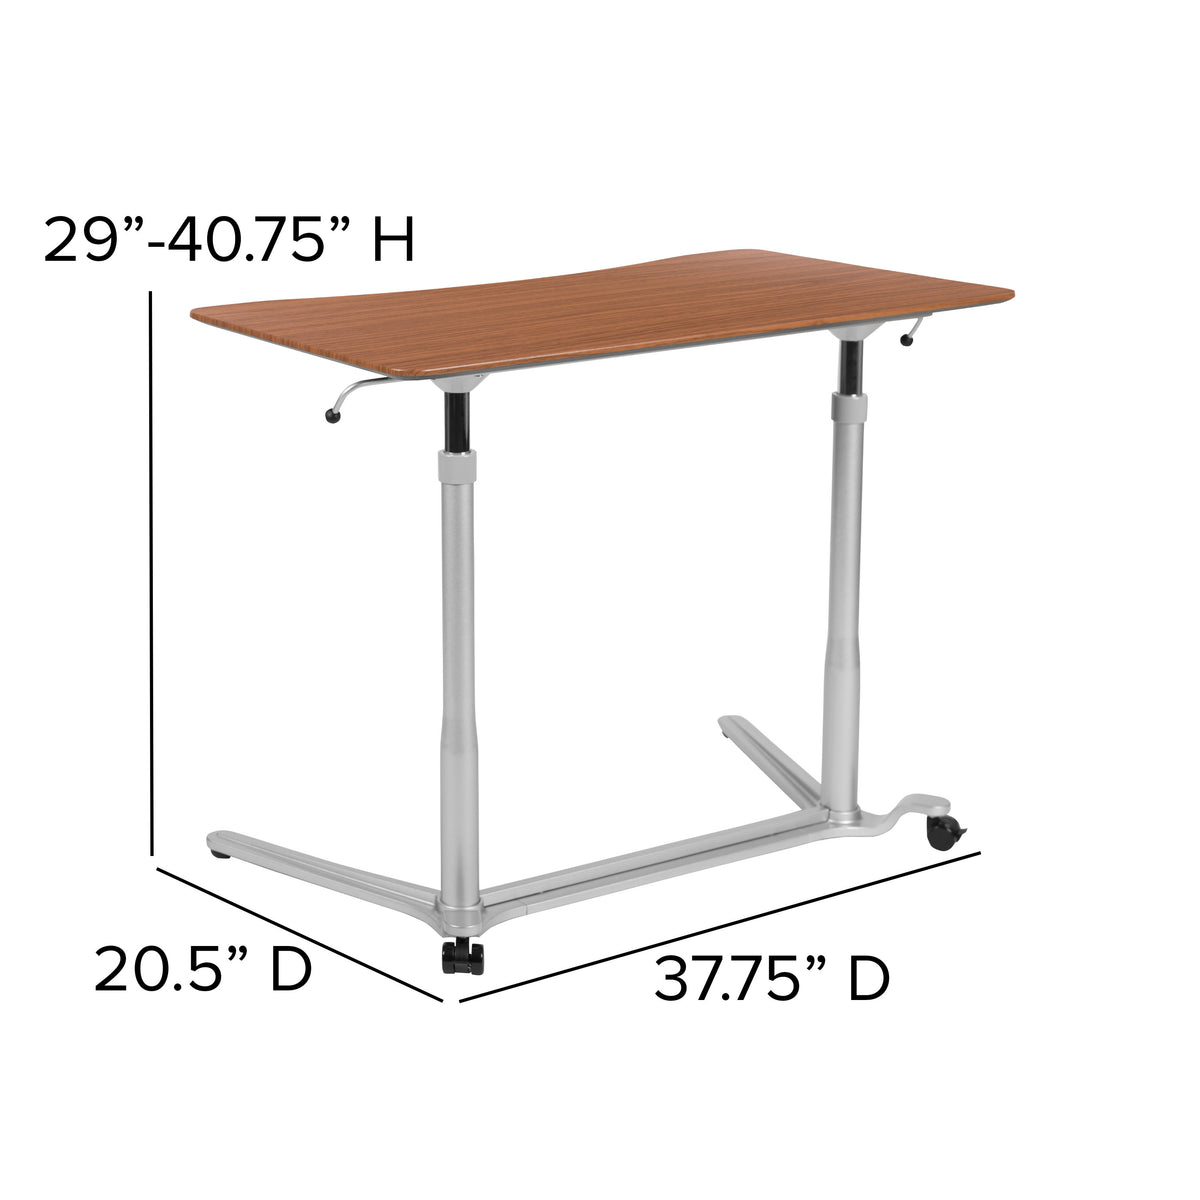 Cherry |#| Cherry Sit-Down, Stand-Up Ergonomic Computer Desk - Standing Desk